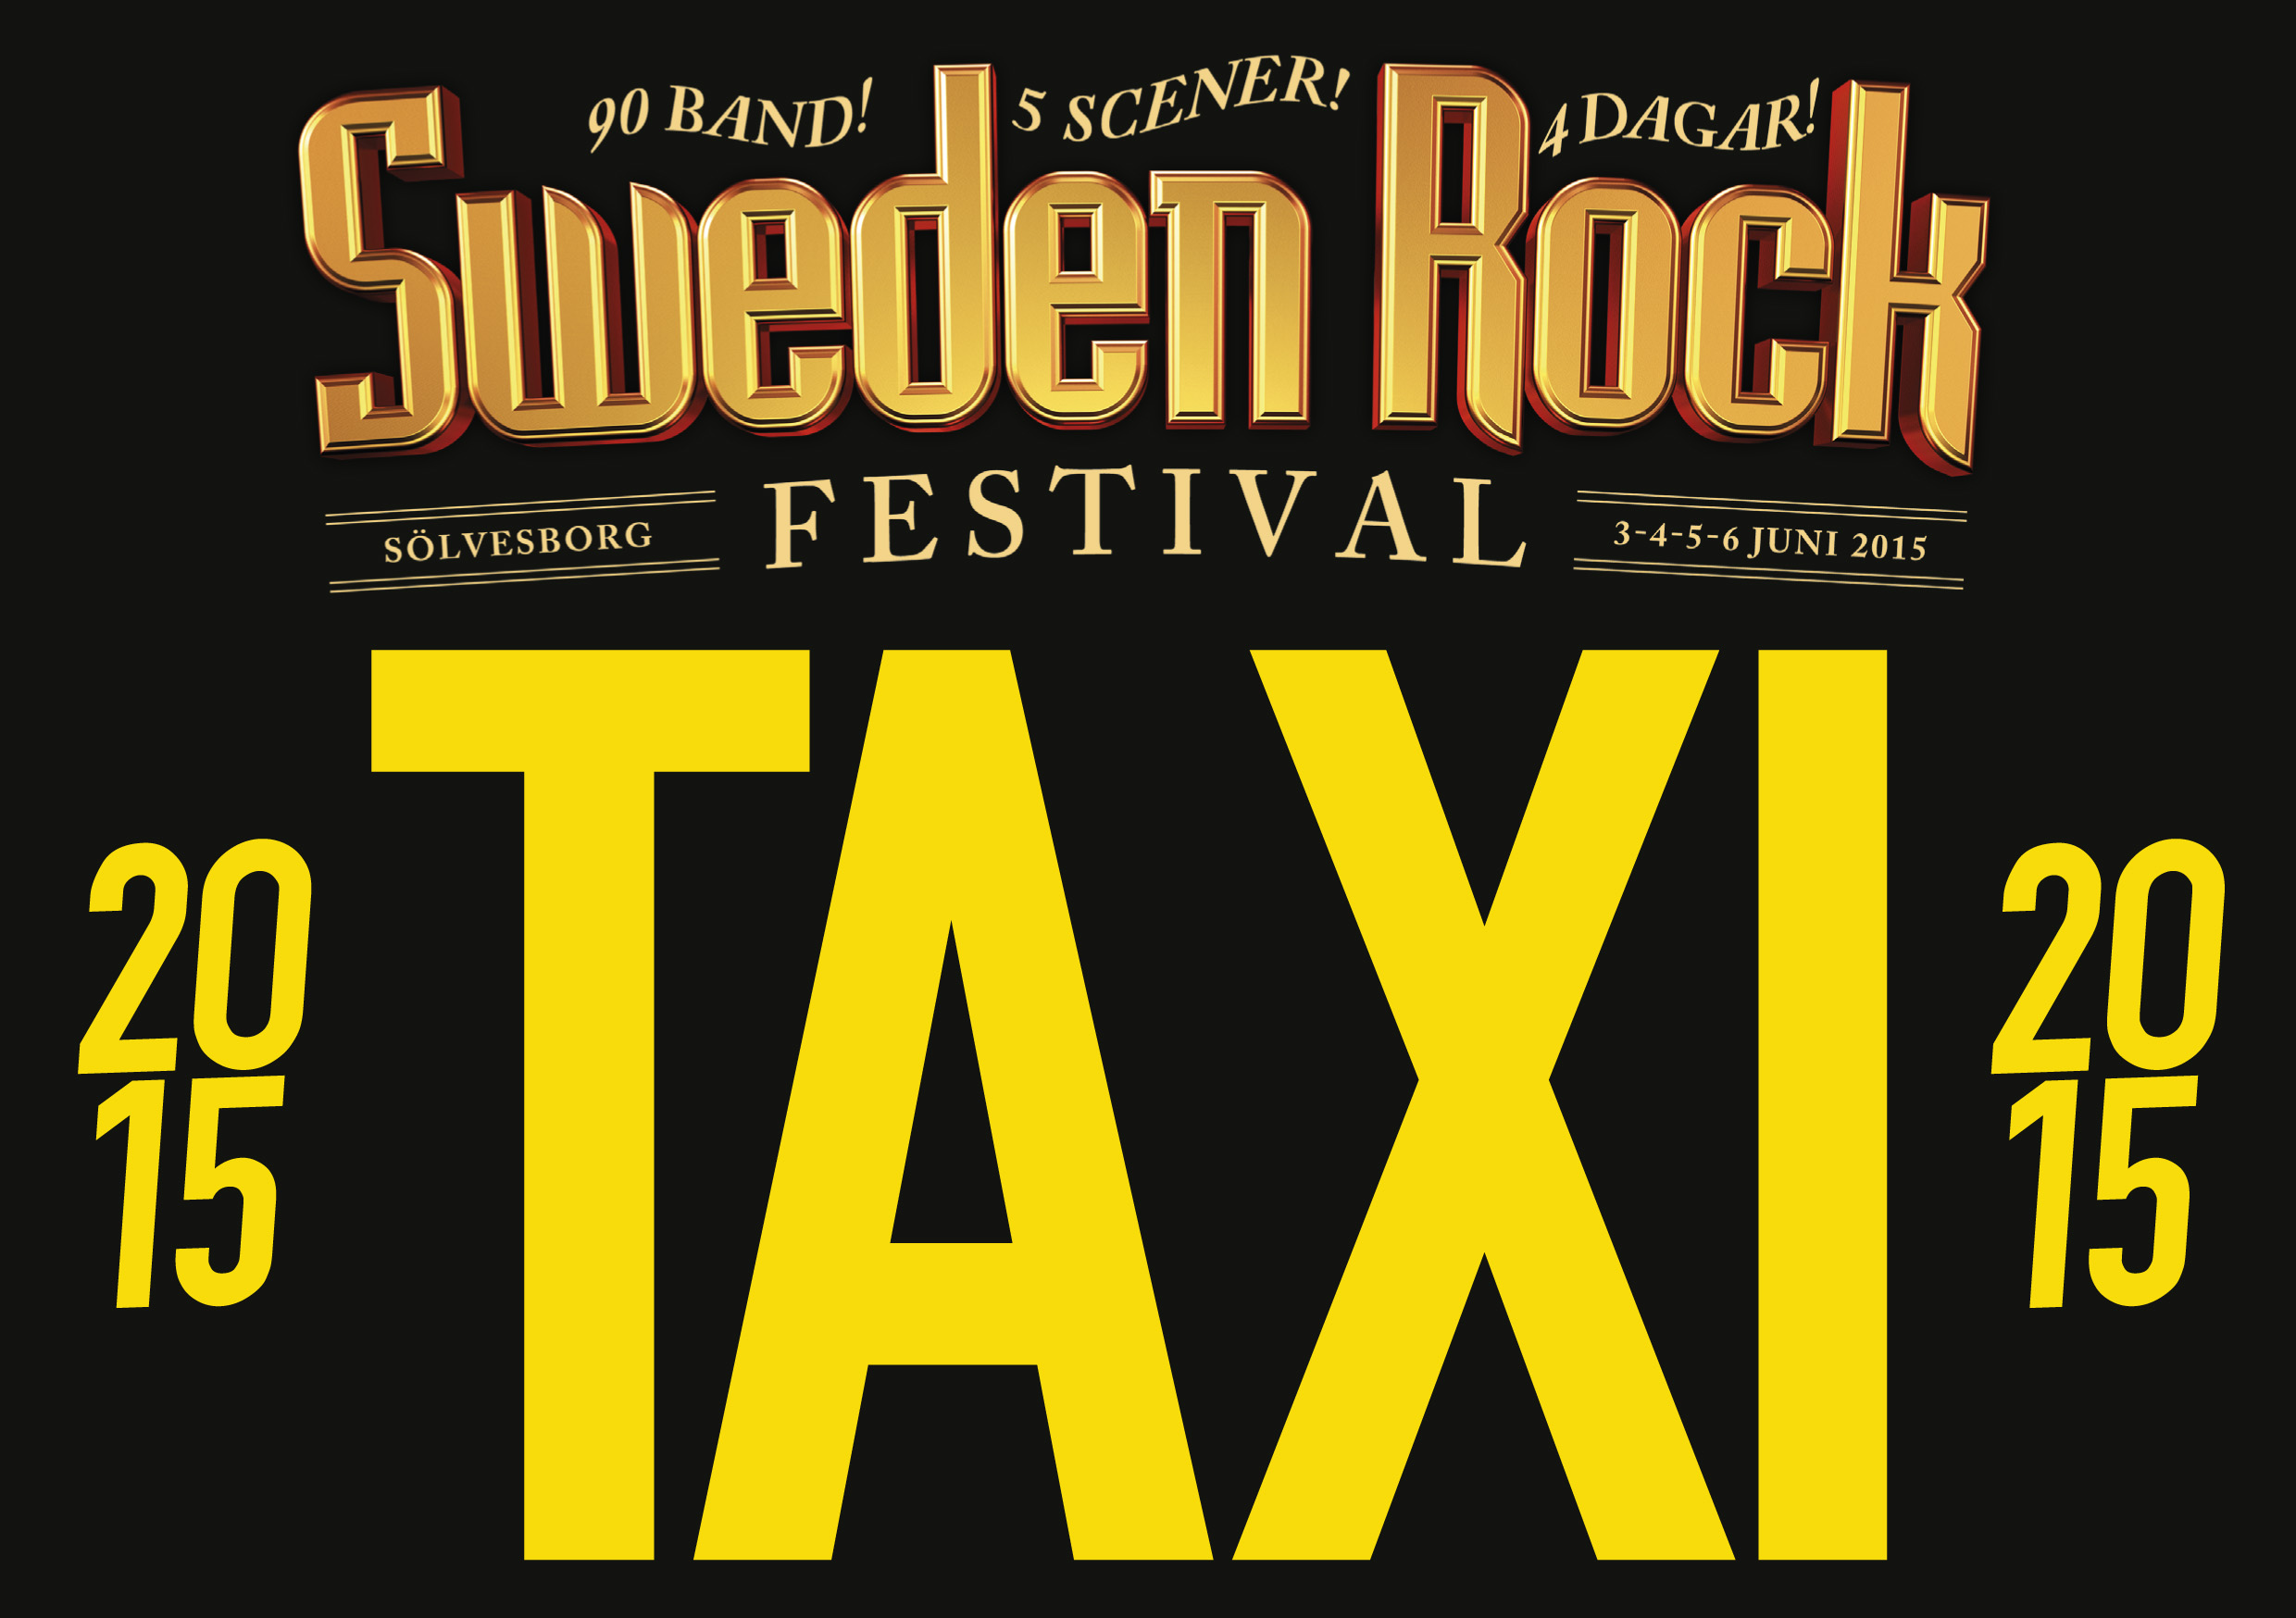 Sweden Rock Festival TAXI 2015 90 Band! 8 Scener! 4 Dagar! Sölvesborg 3-4-5-6 juni 2015